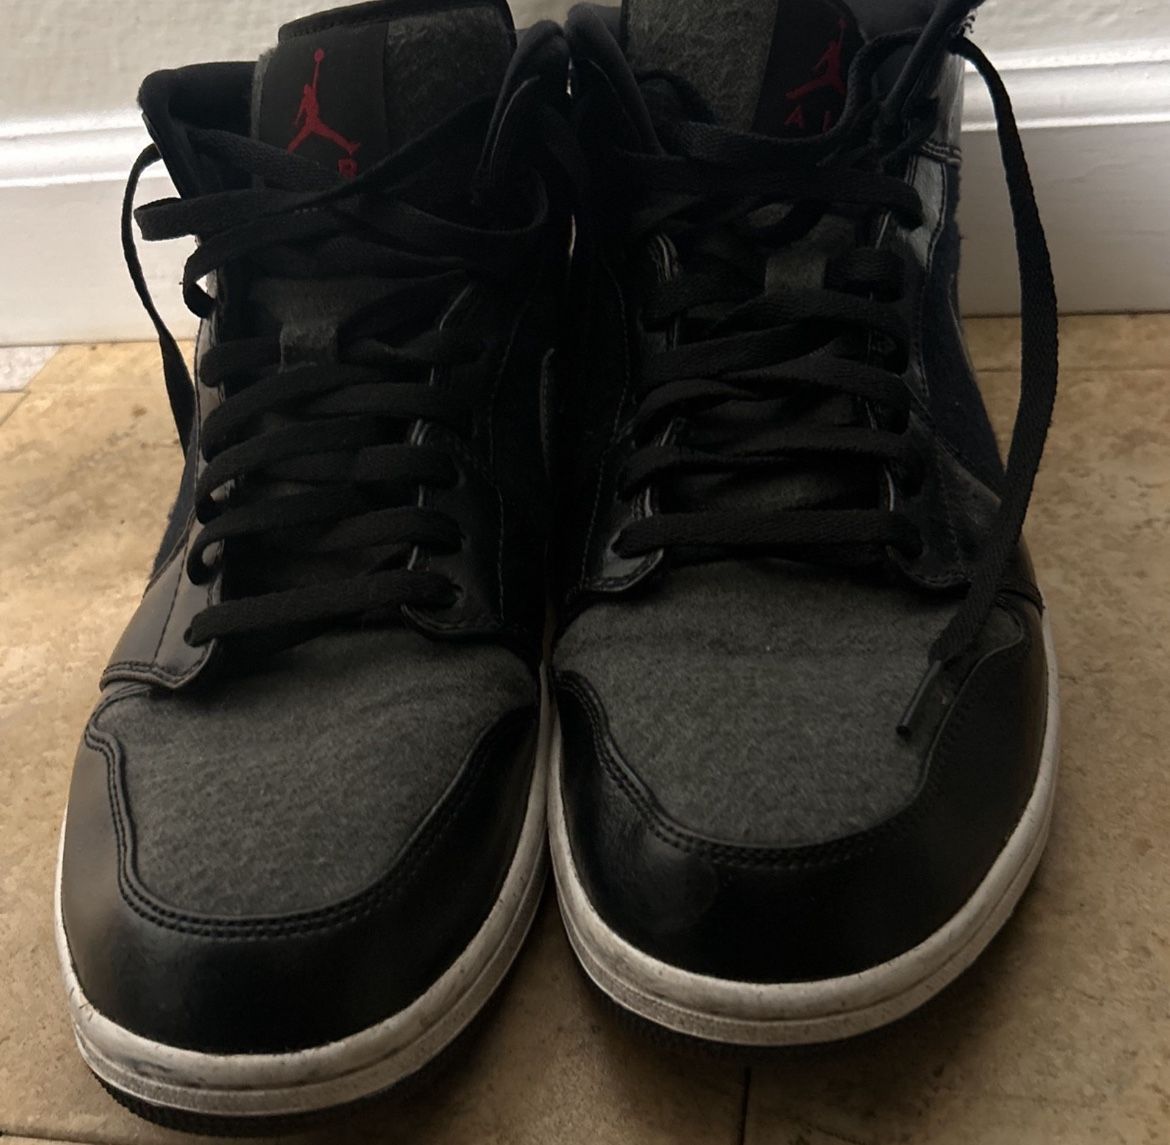 Nike Air Jordan 1 Premium Winterized black/Grey